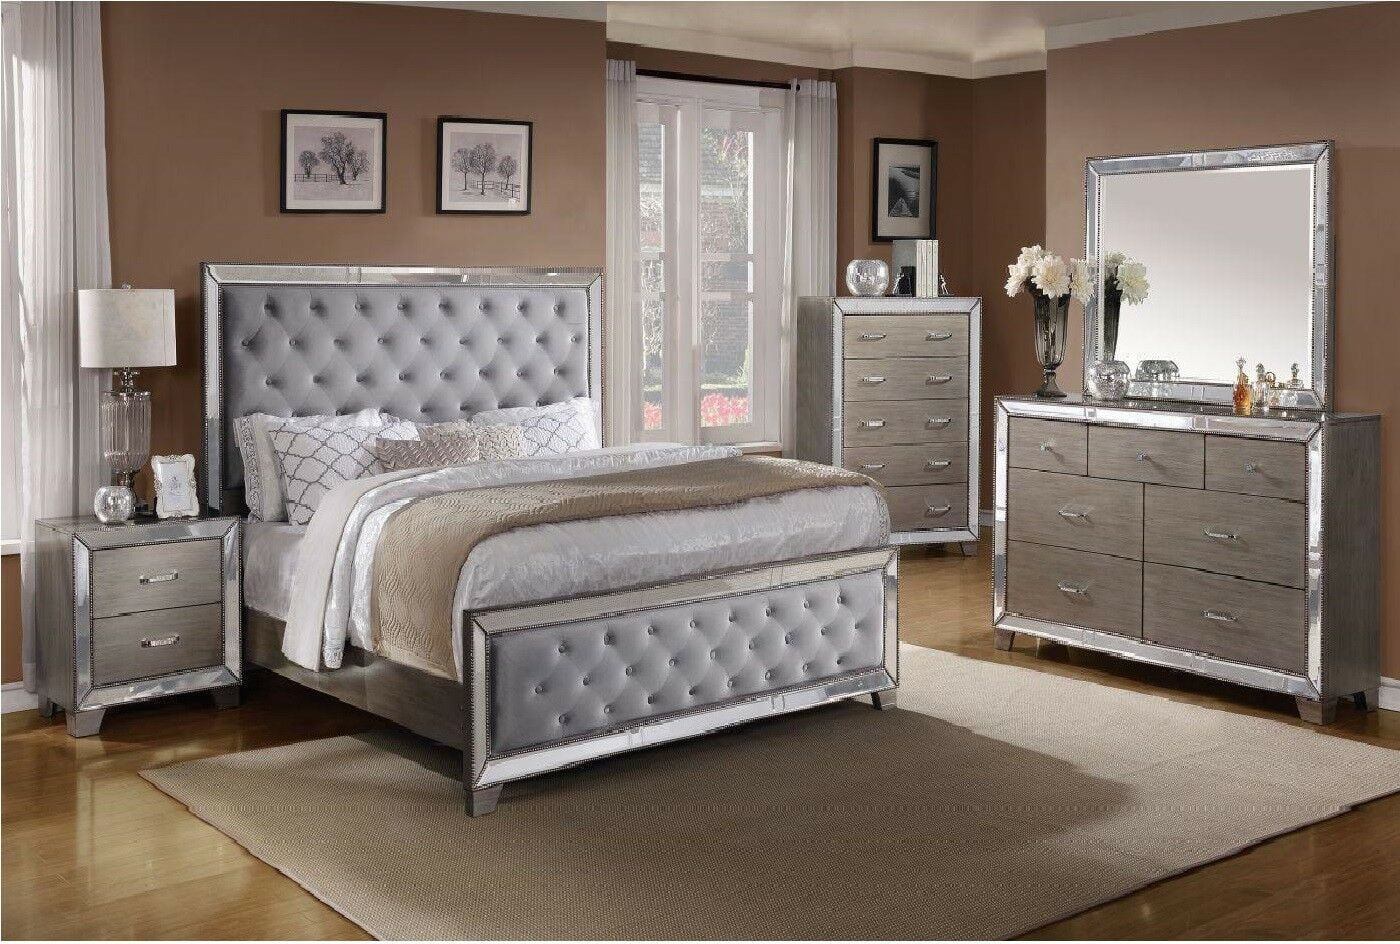 modern mirrored bedroom furniture dresser